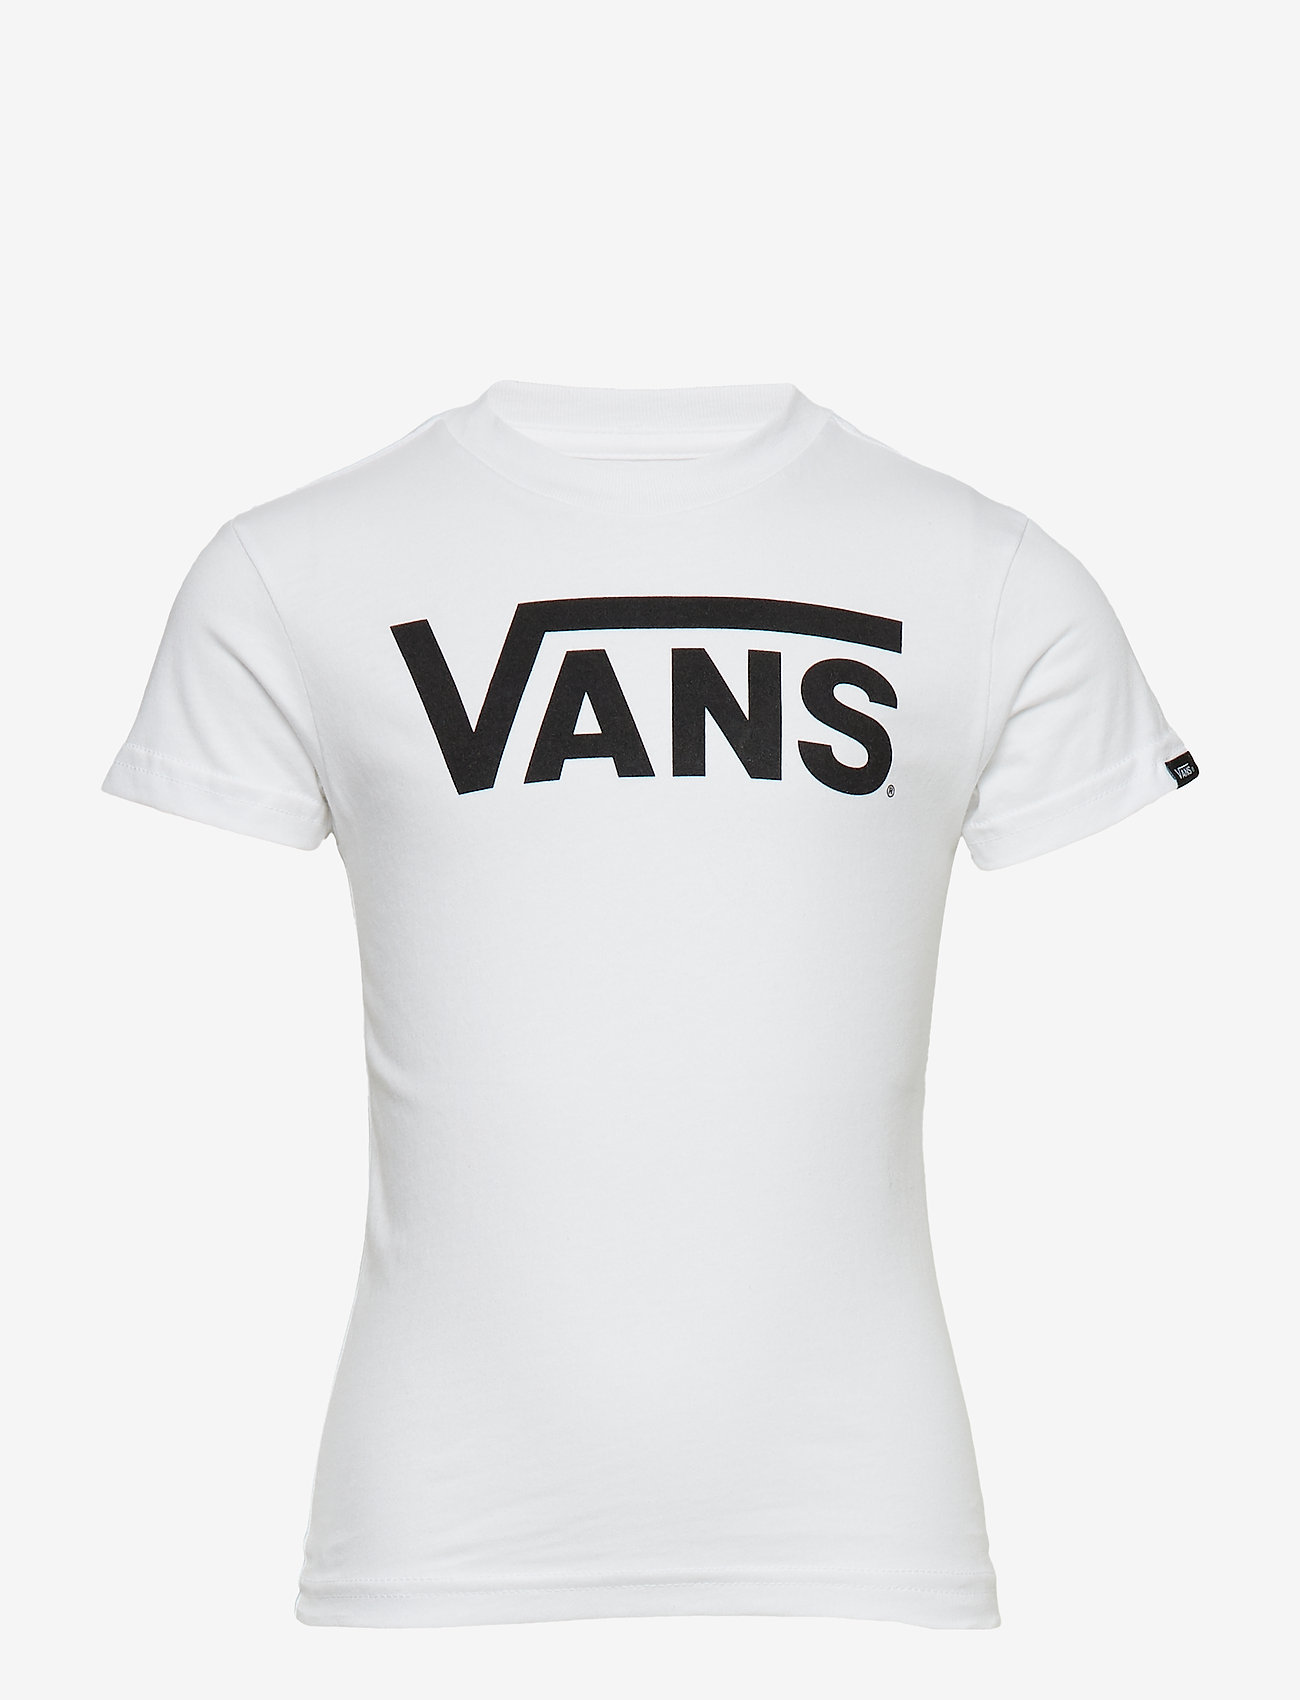 VANS - VANS CLASSIC KIDS - white/black - 0